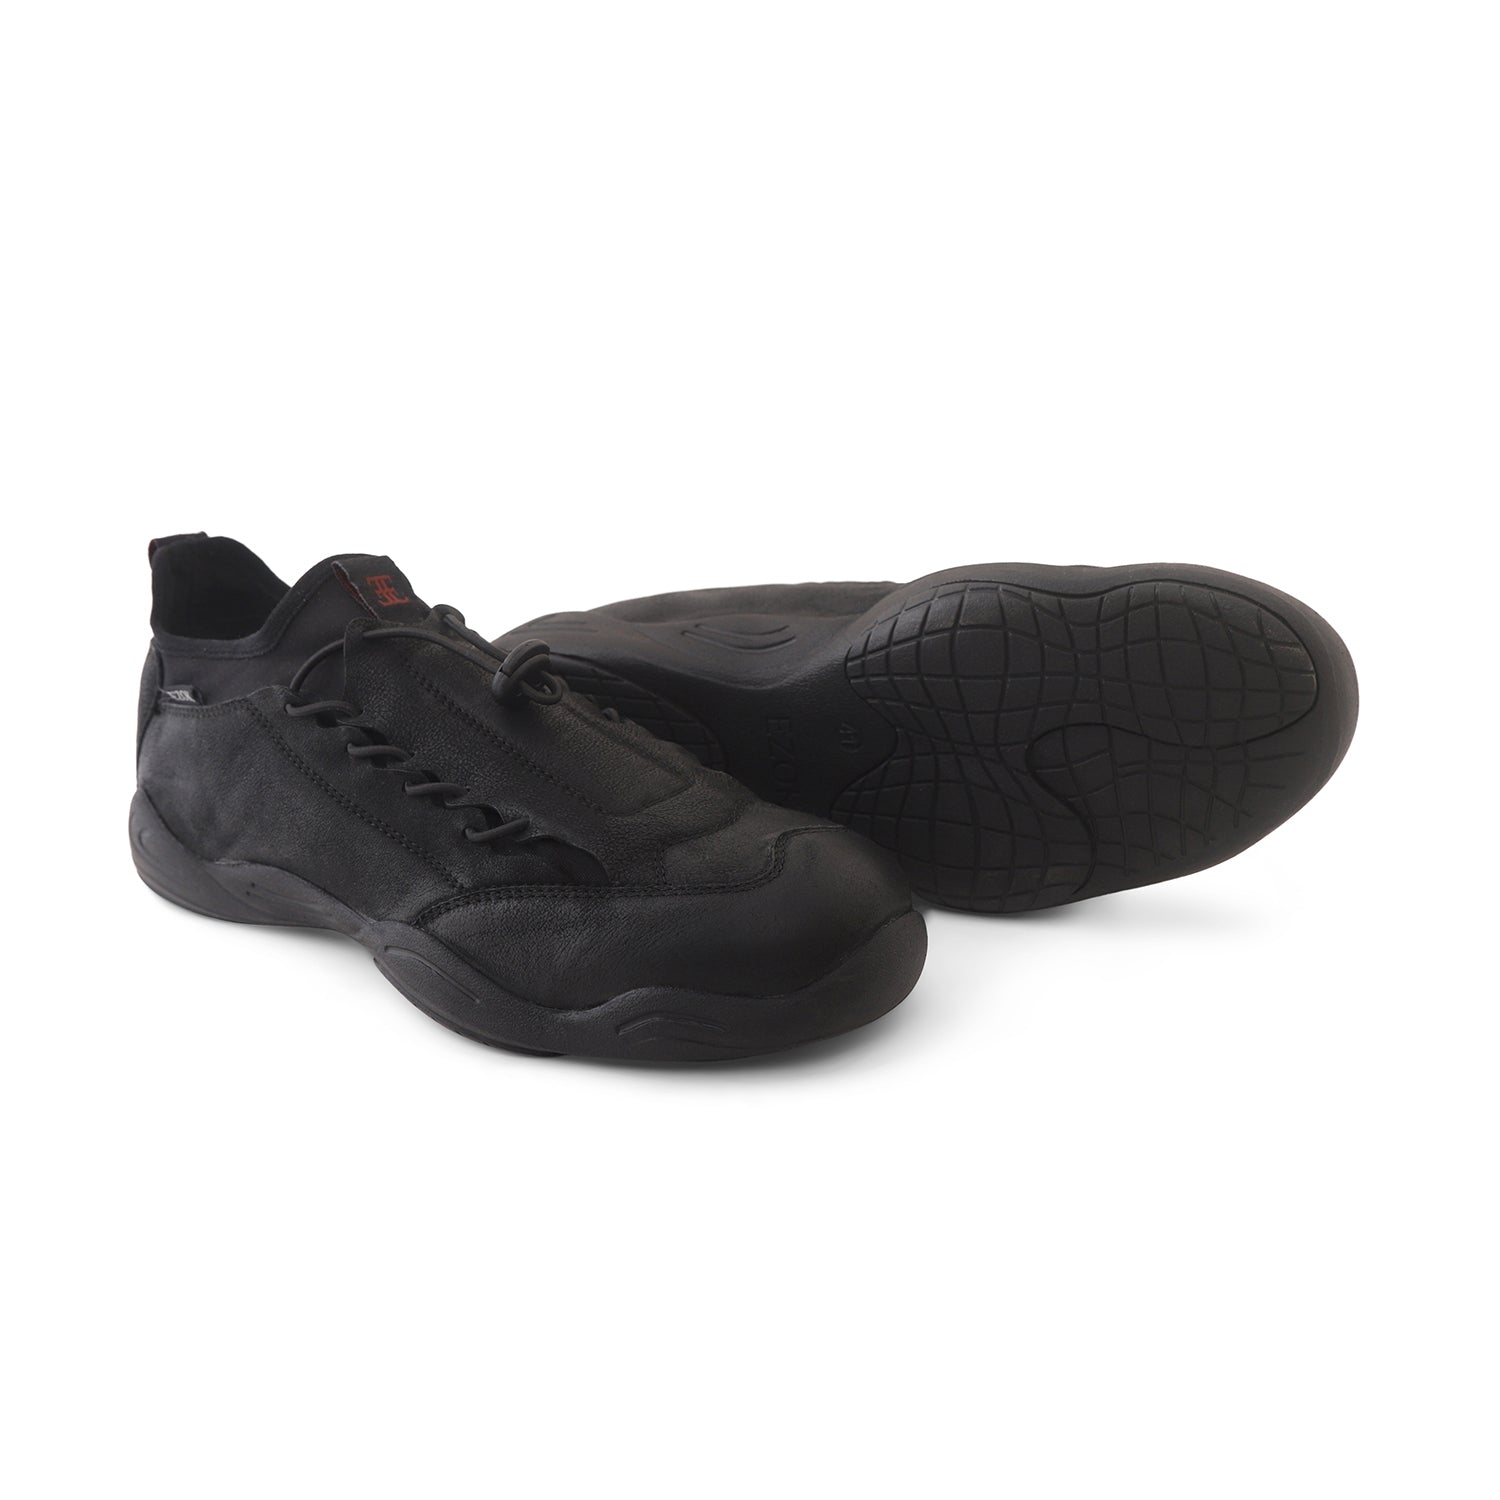 Ezok Black Casual Nubuck Leather Men Sneakers